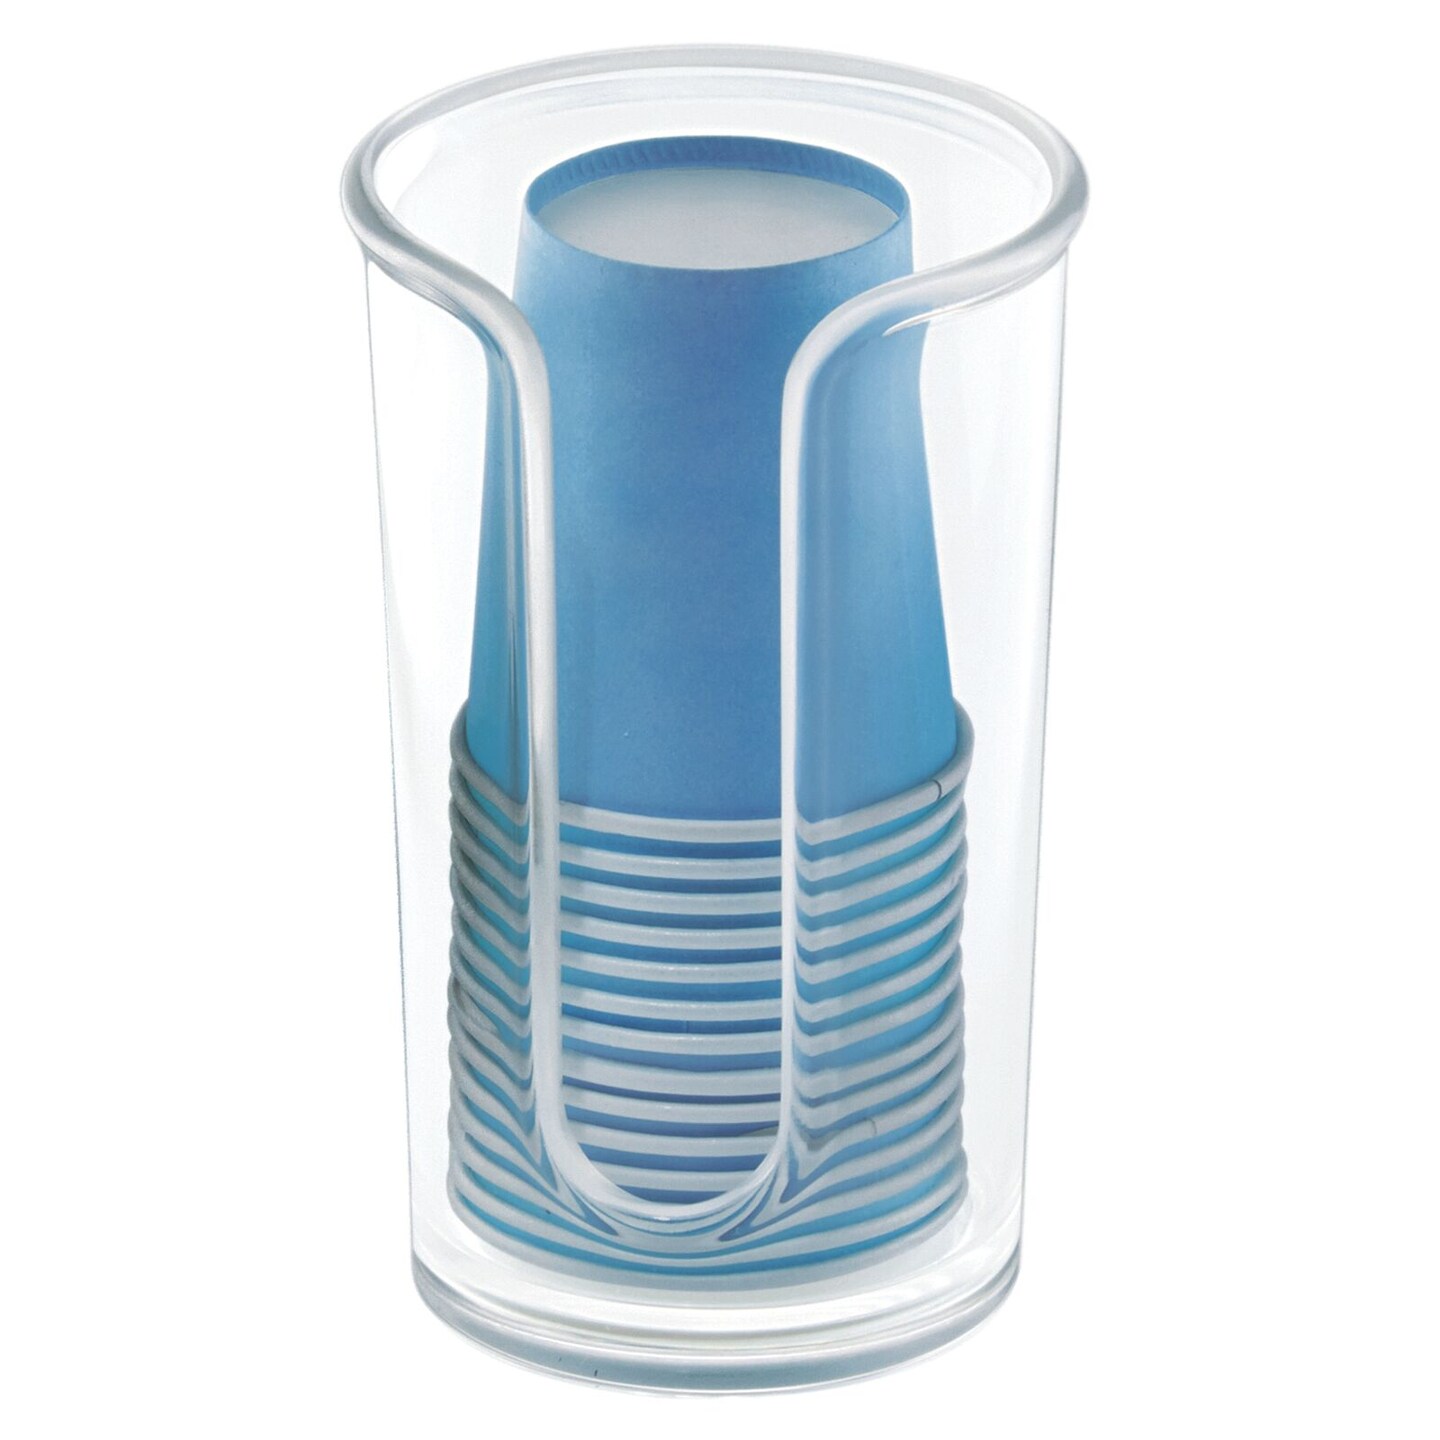 Bathroom Cup Dispenser, Plastic Disposable Paper Cup Holder